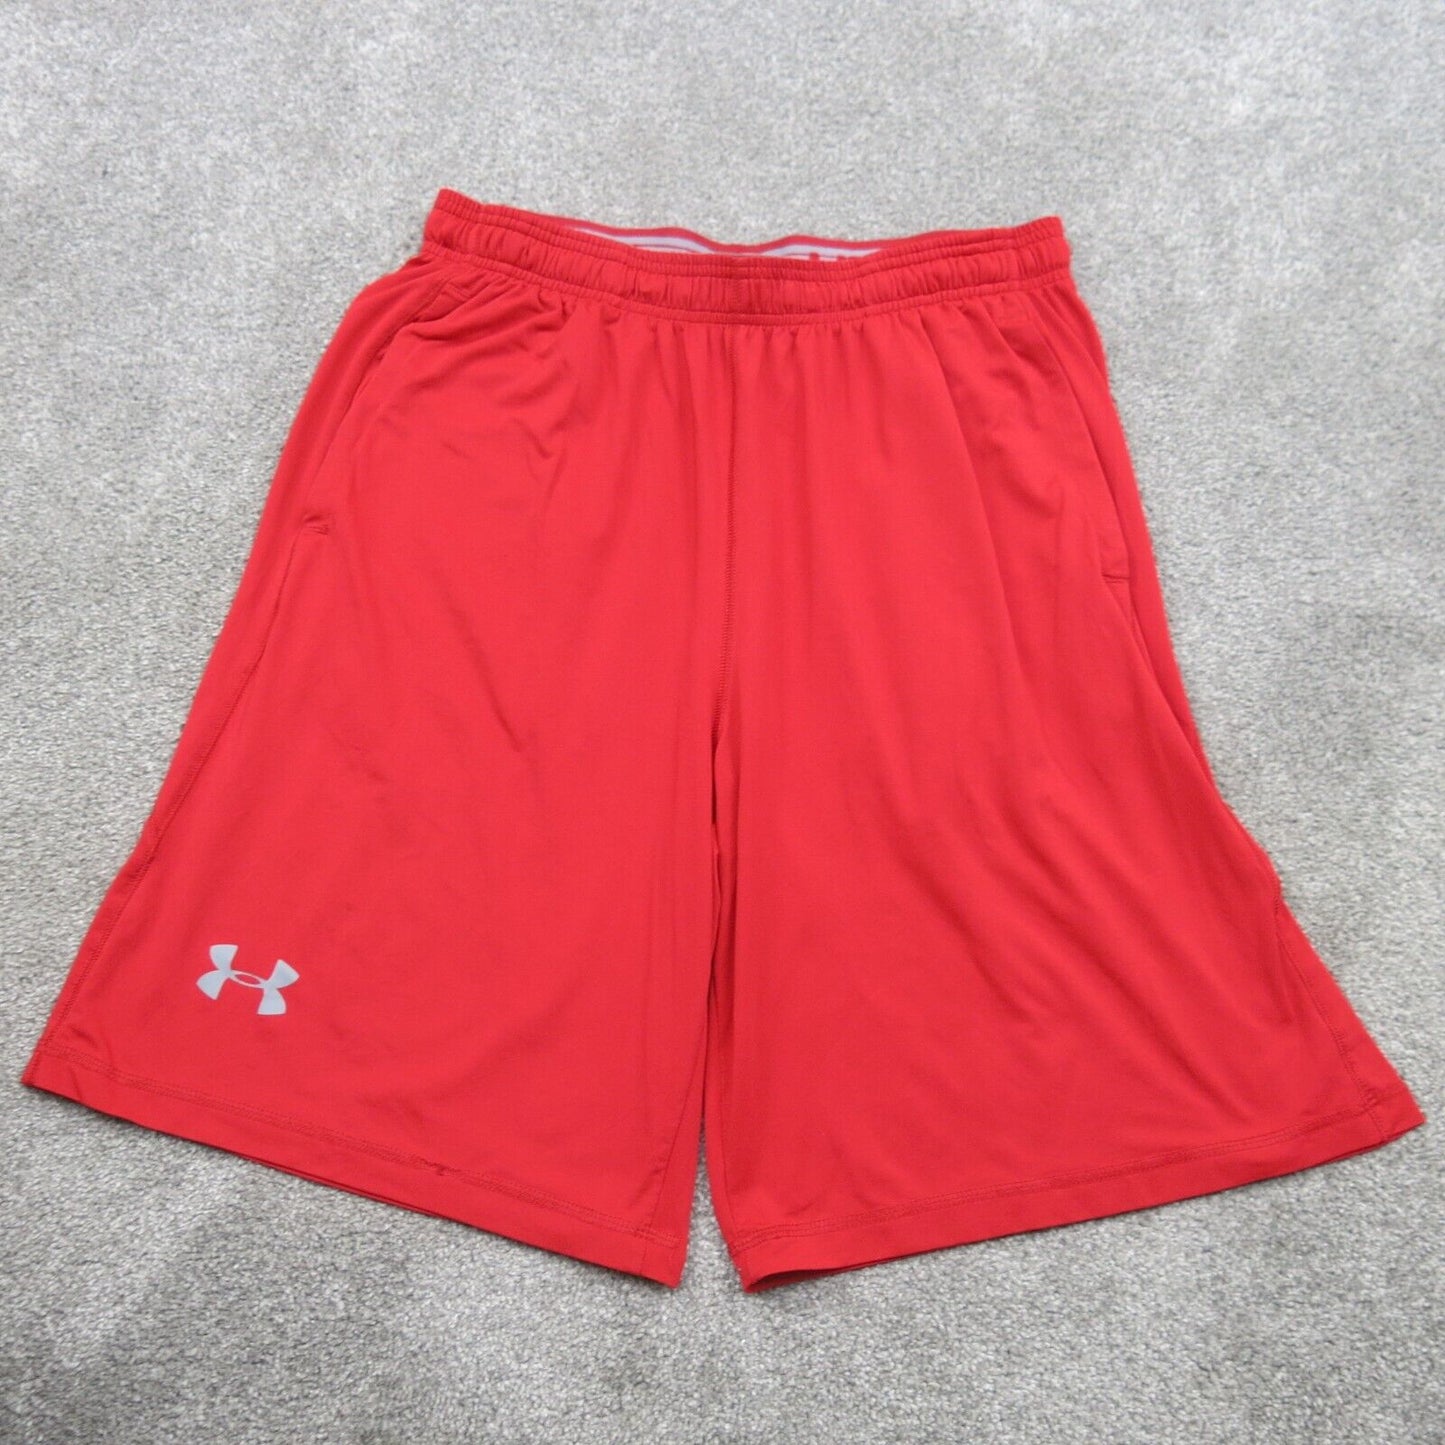 Under Armour Basketball Shorts Youth Boys Large Red Athletics Heatgear Shorts